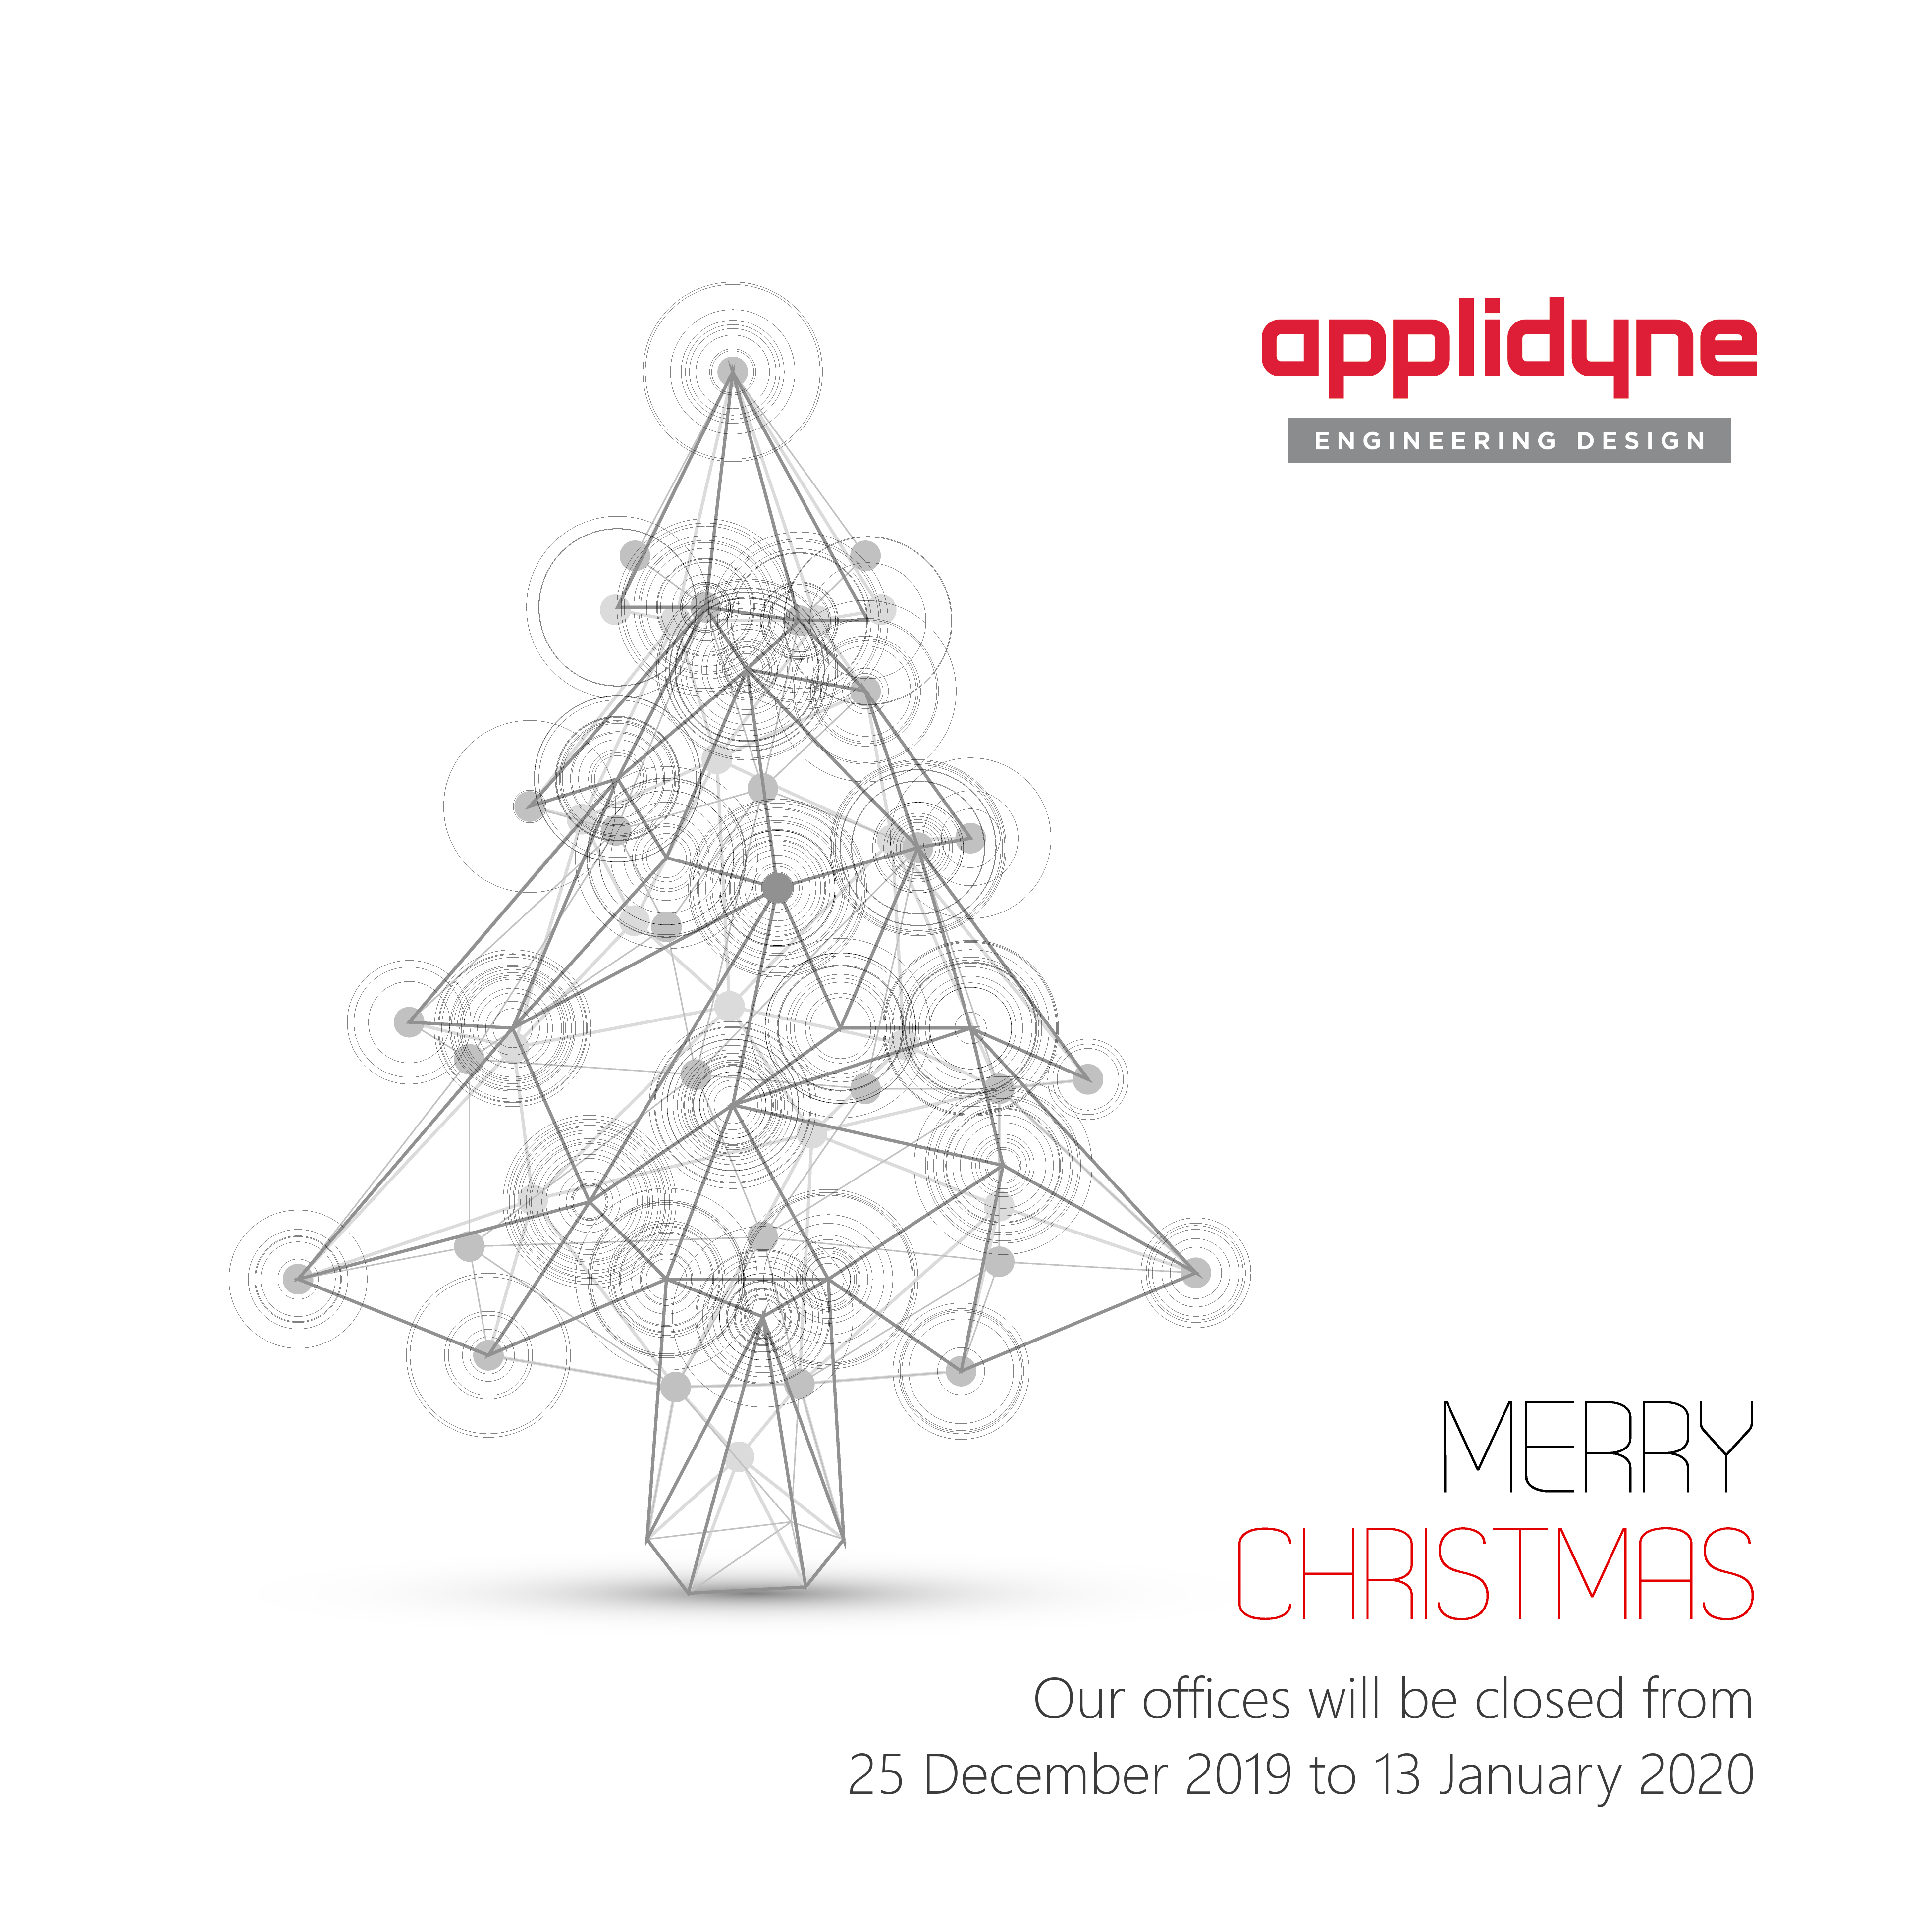 2020 Applidyne Christmas closure